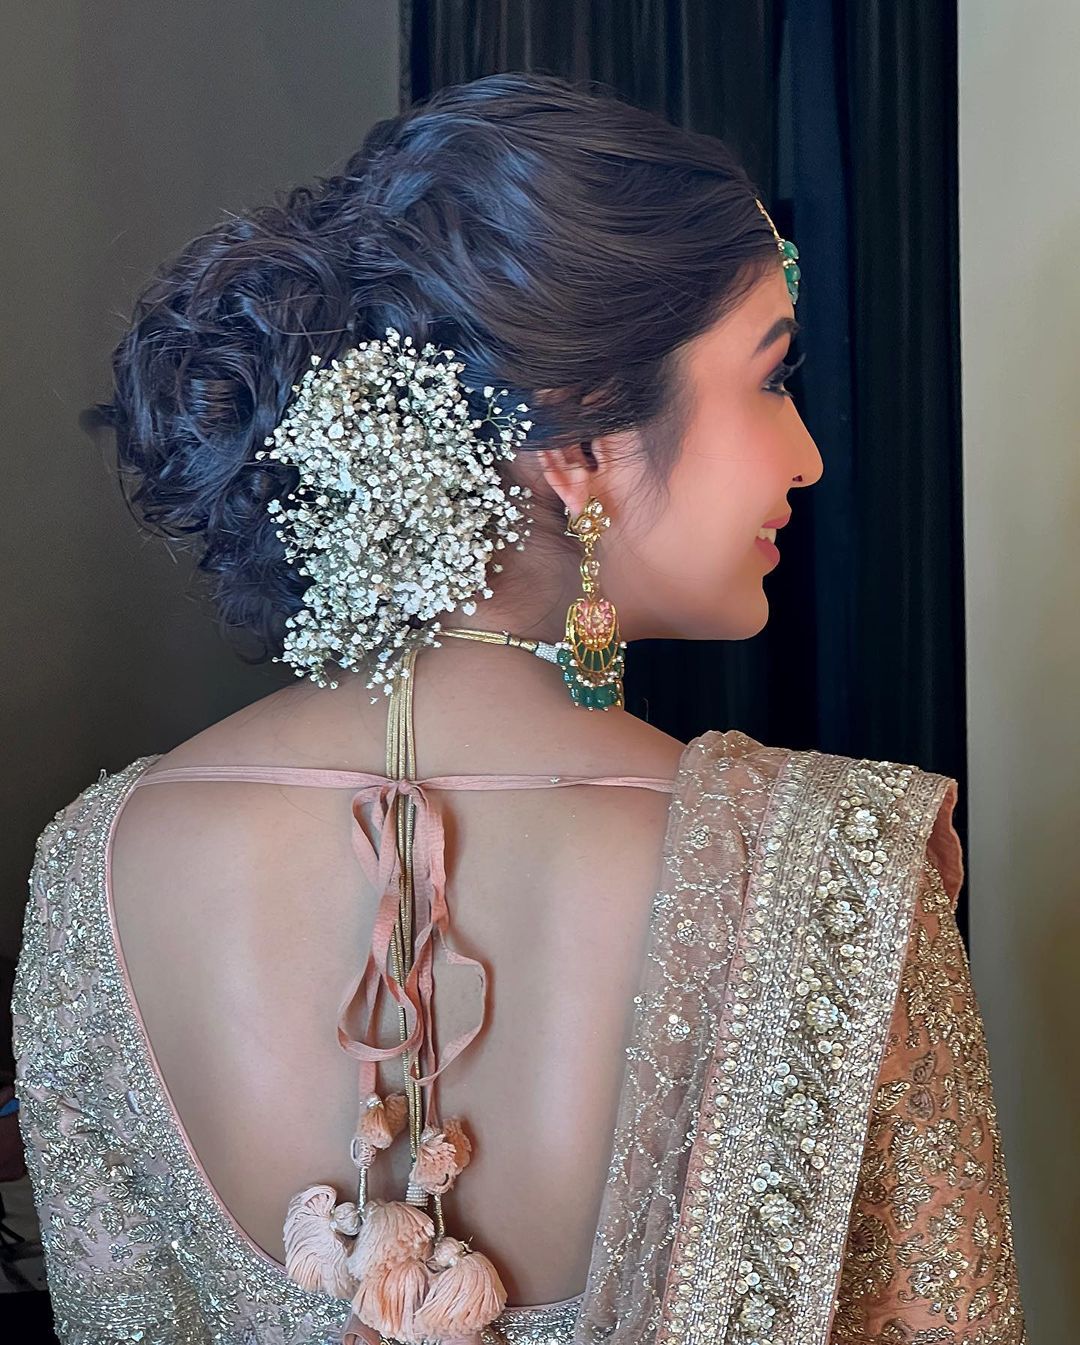 Gypsies, A Pretty Floral Bun Hairstyle For Wedding Brides